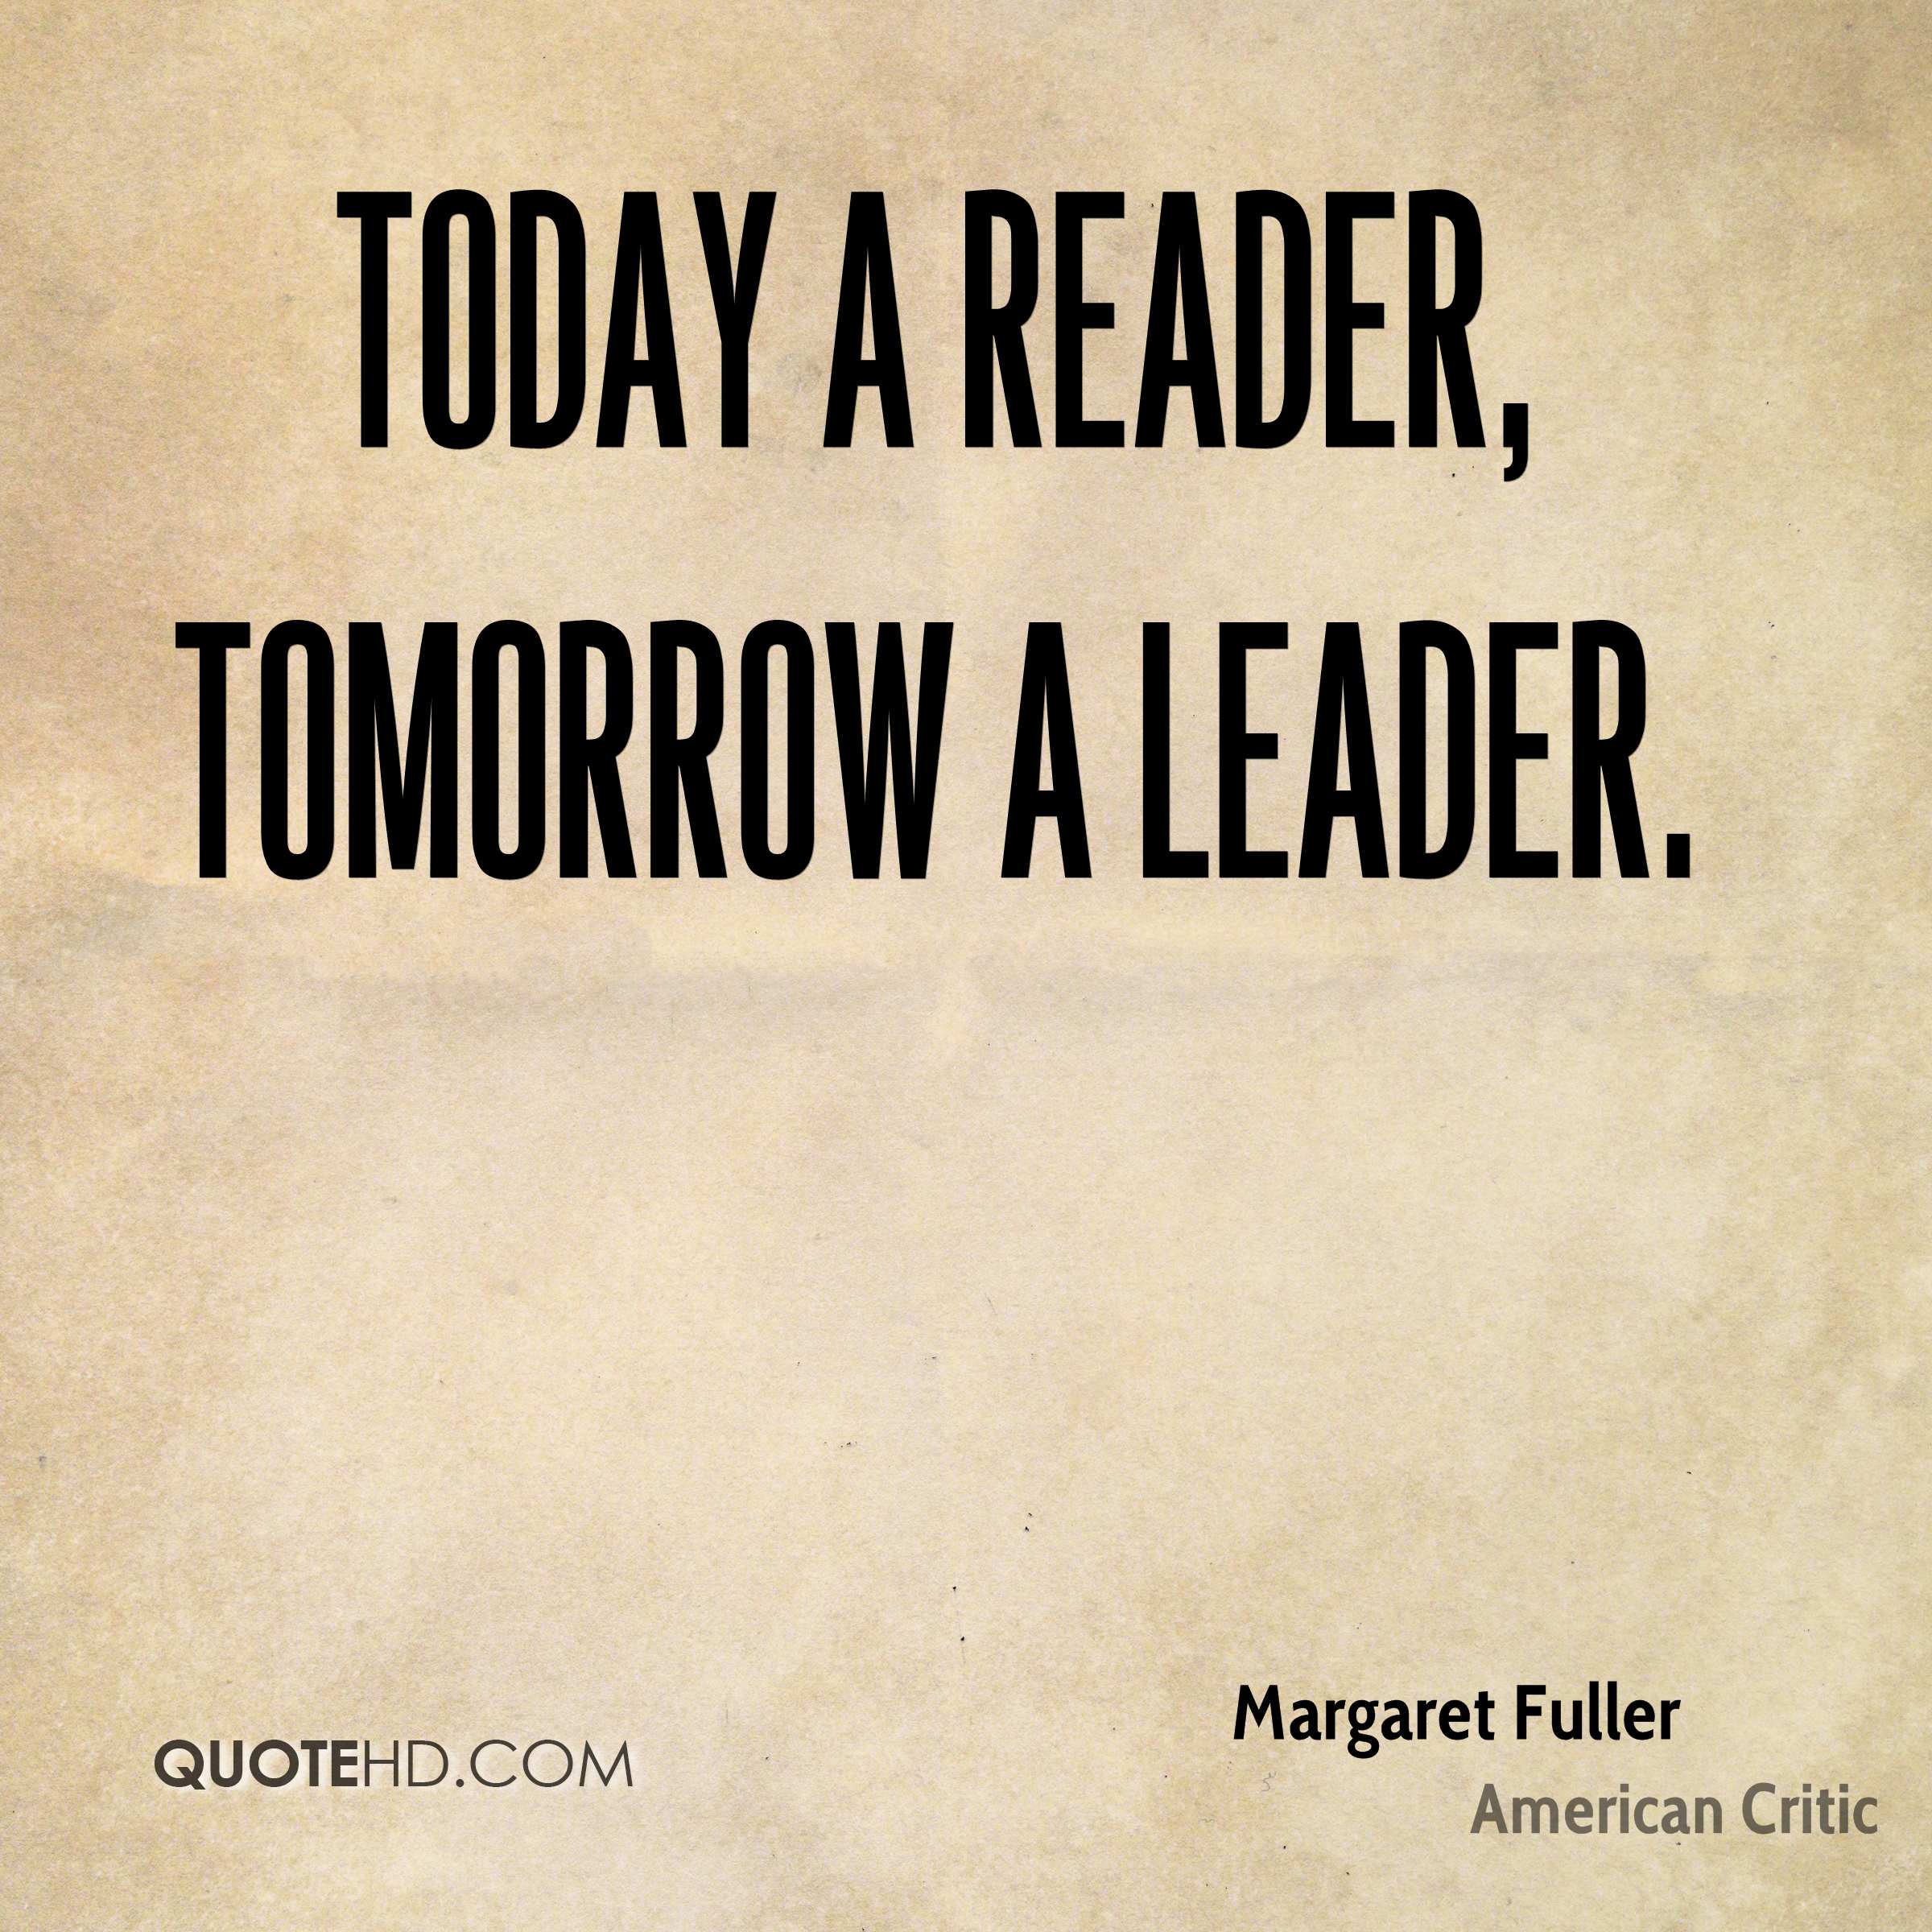 Today a reader, tomorrow a leader – Margaret Fuller